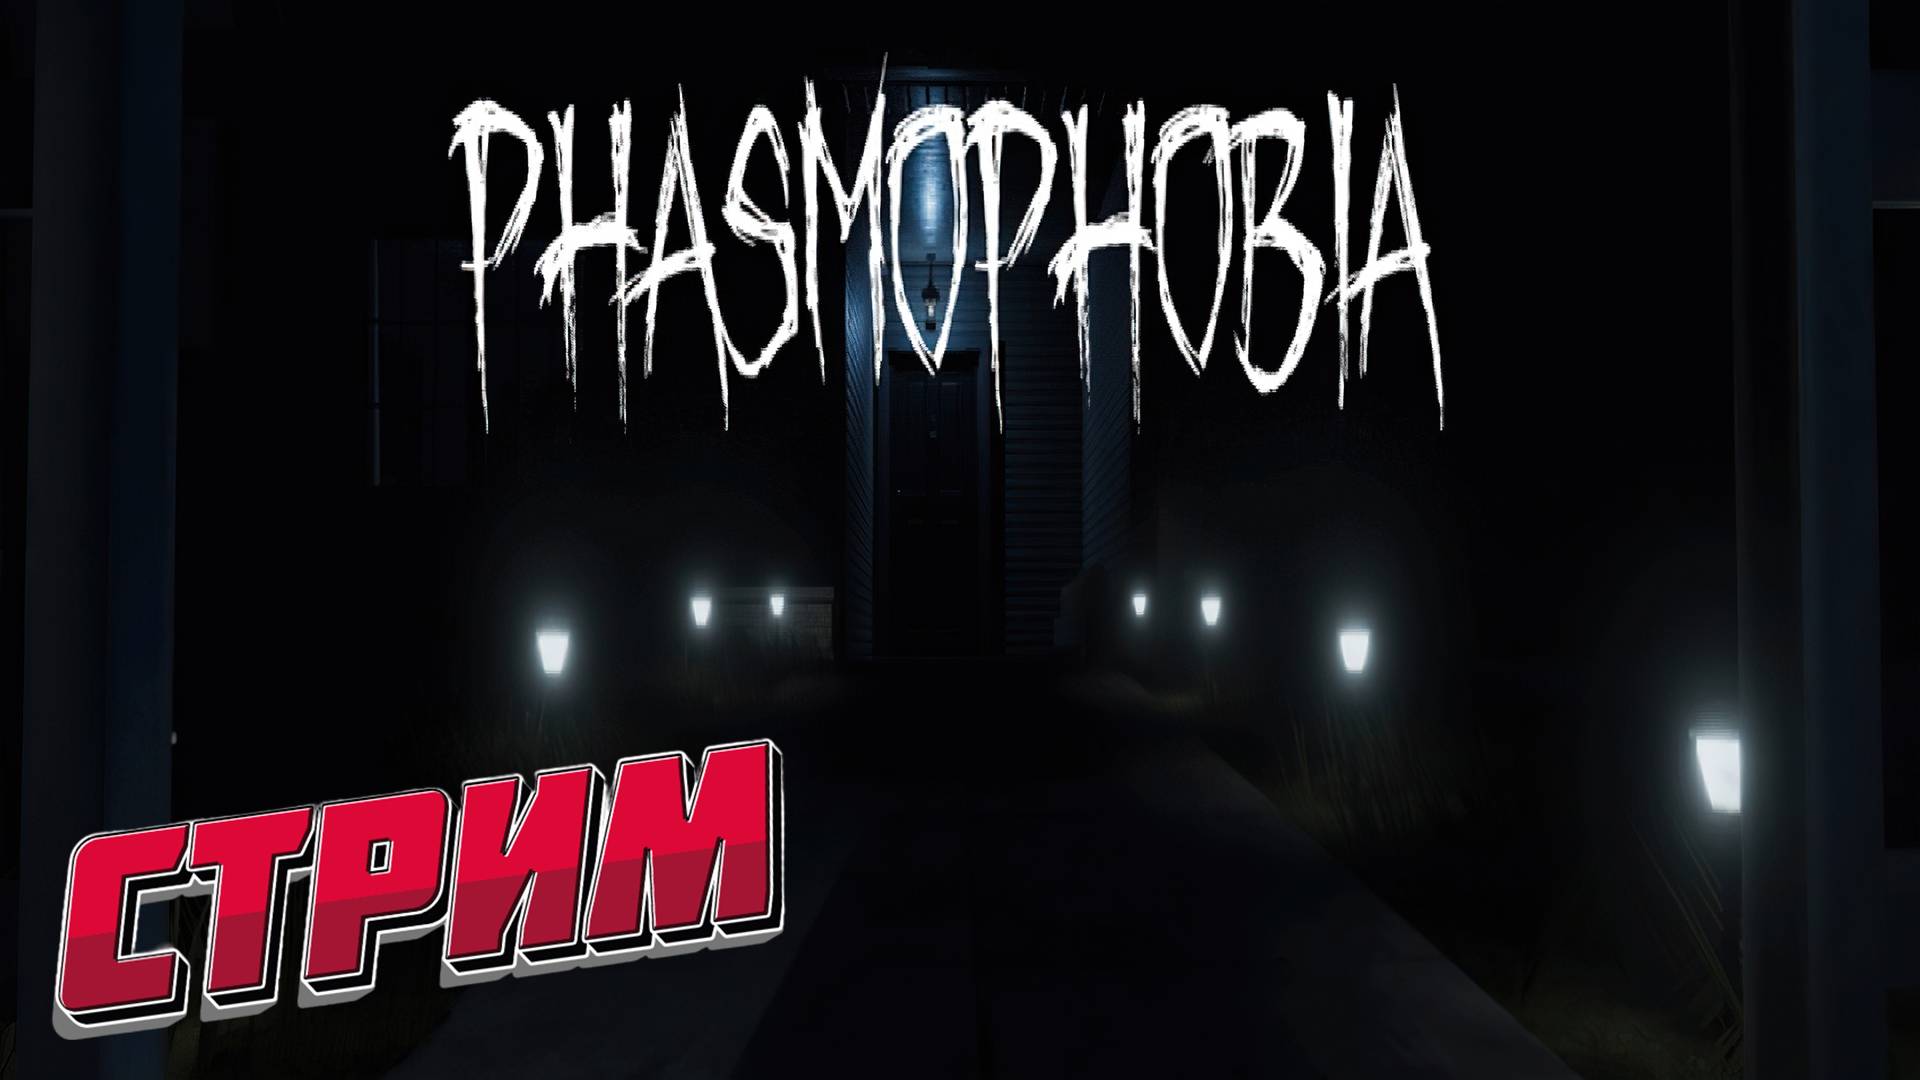 ФАЗМАГОРИЯ ЖДЁТ НАС АГА! PHASMAPHOBIA СТРИМ 2 #phasmaphobia